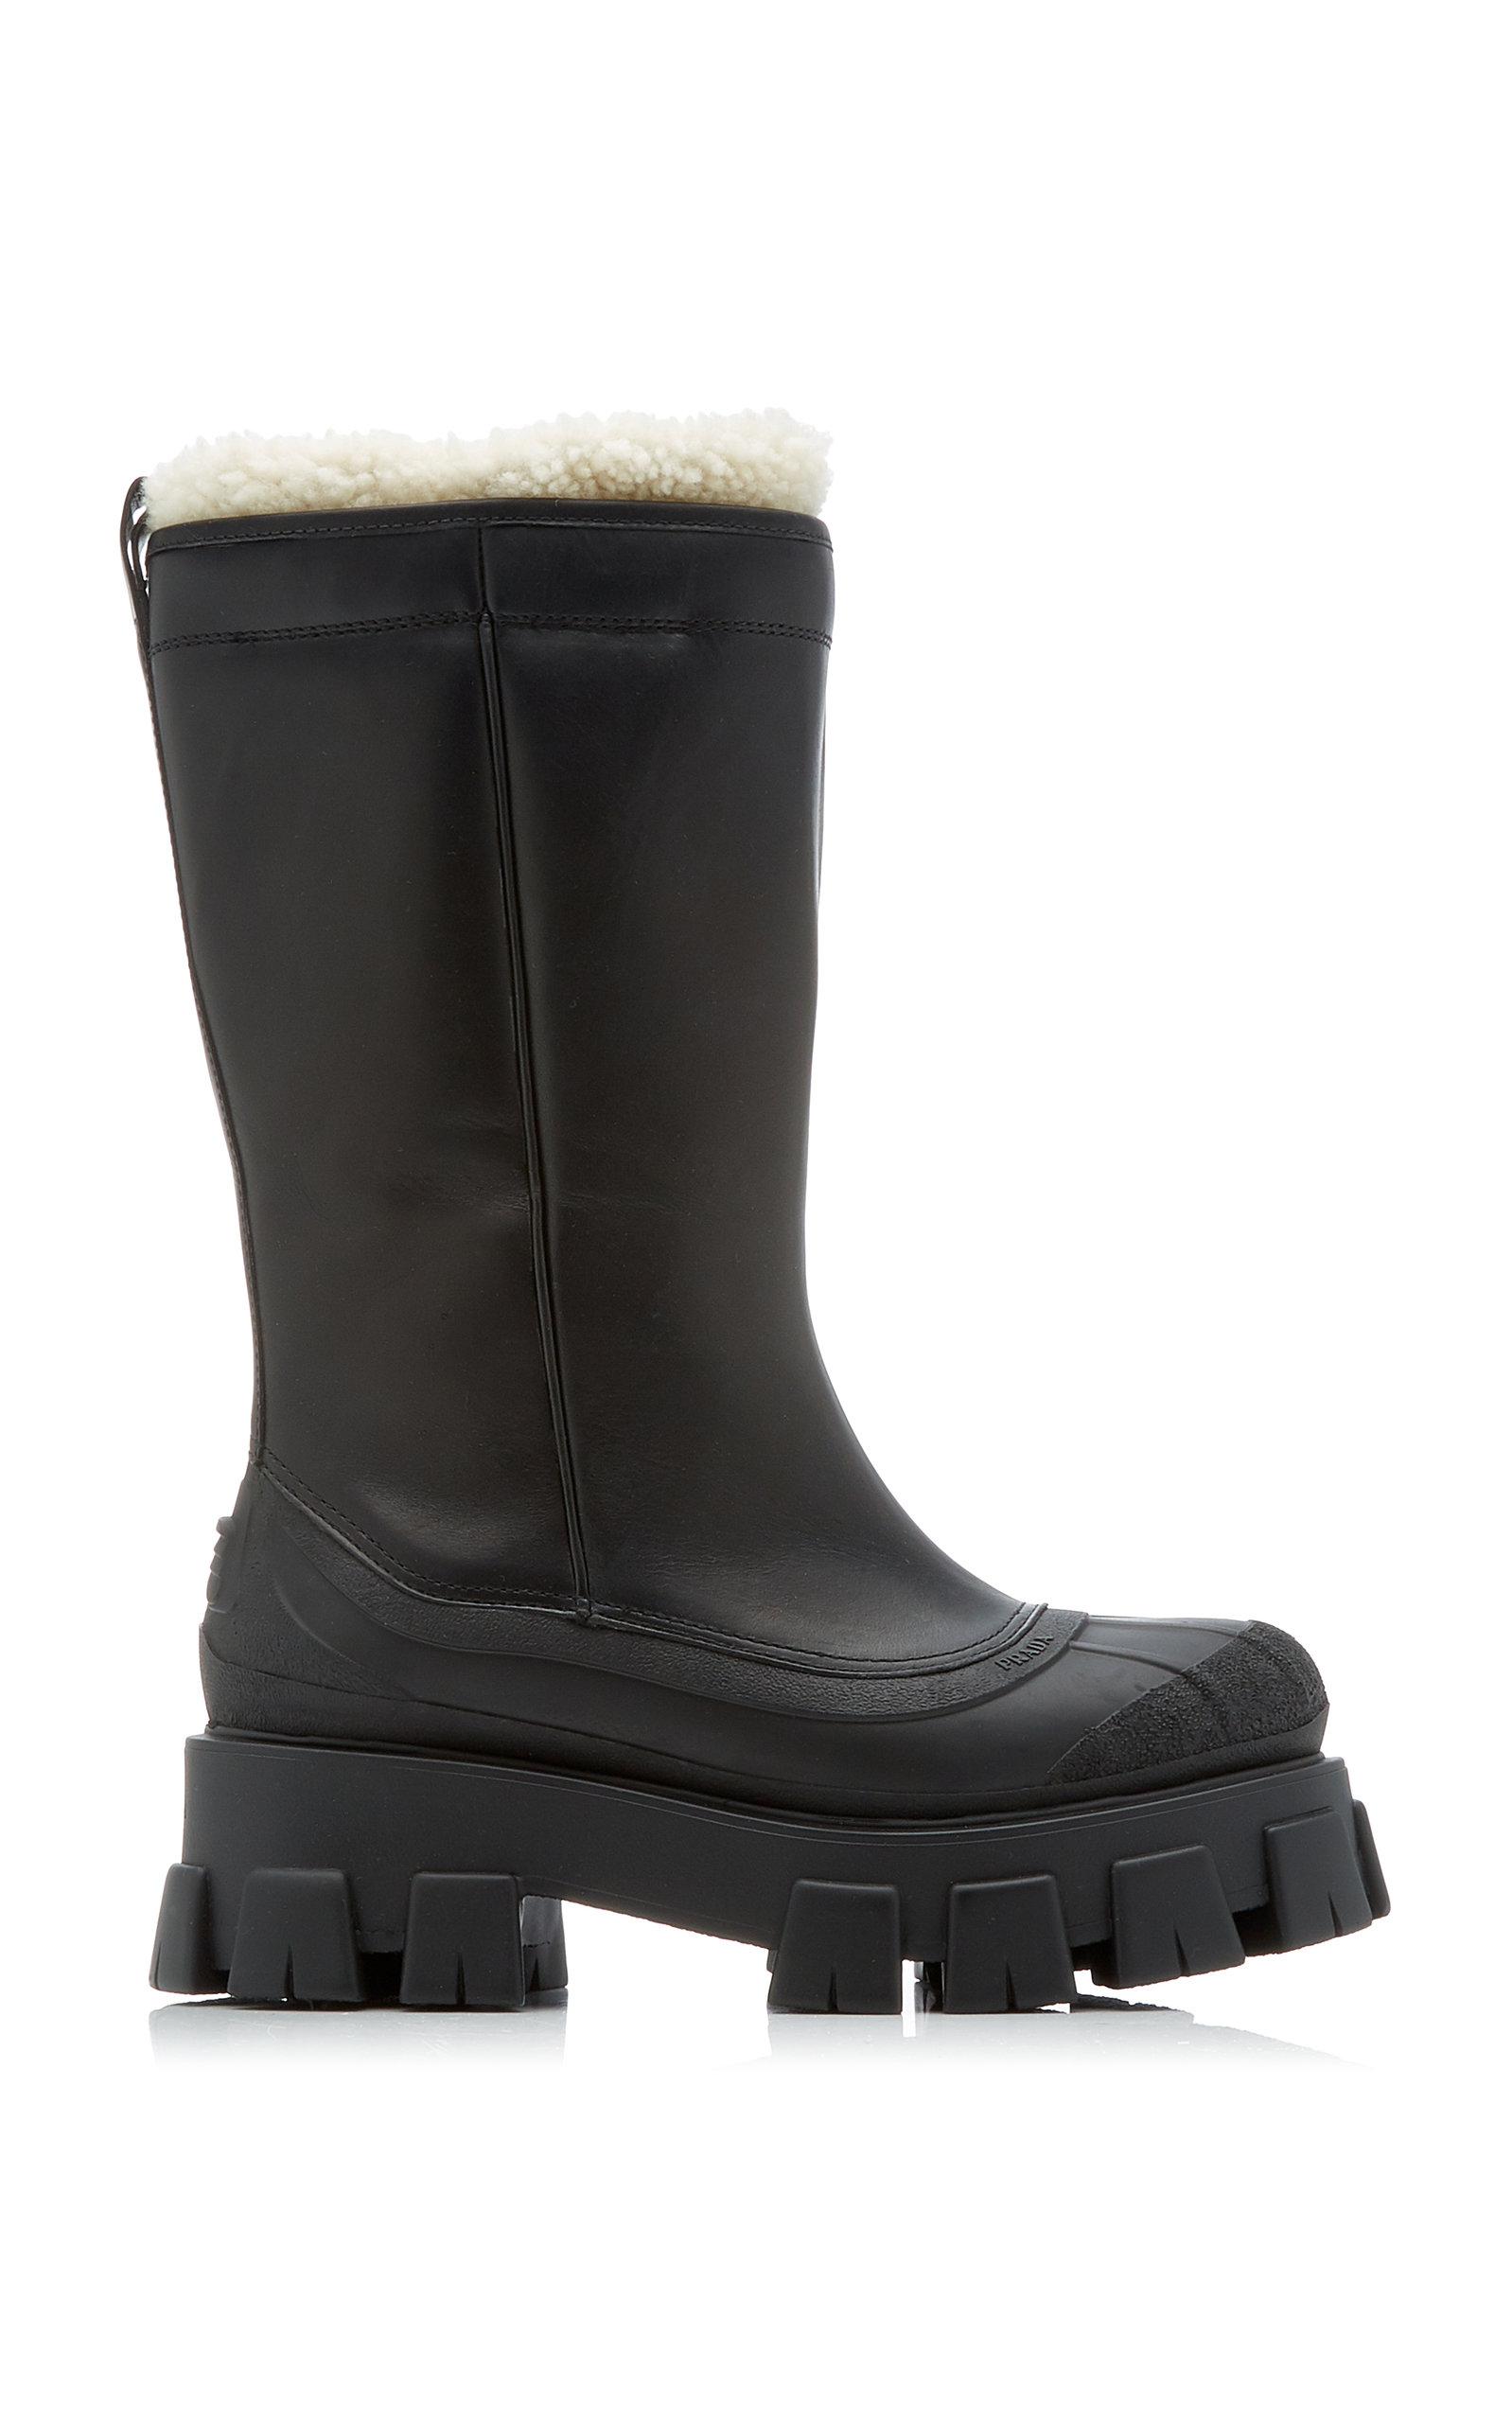 Prada - Monolith Shearling-Trimmed Leather Boots - Black - IT 38 - Moda Operandi